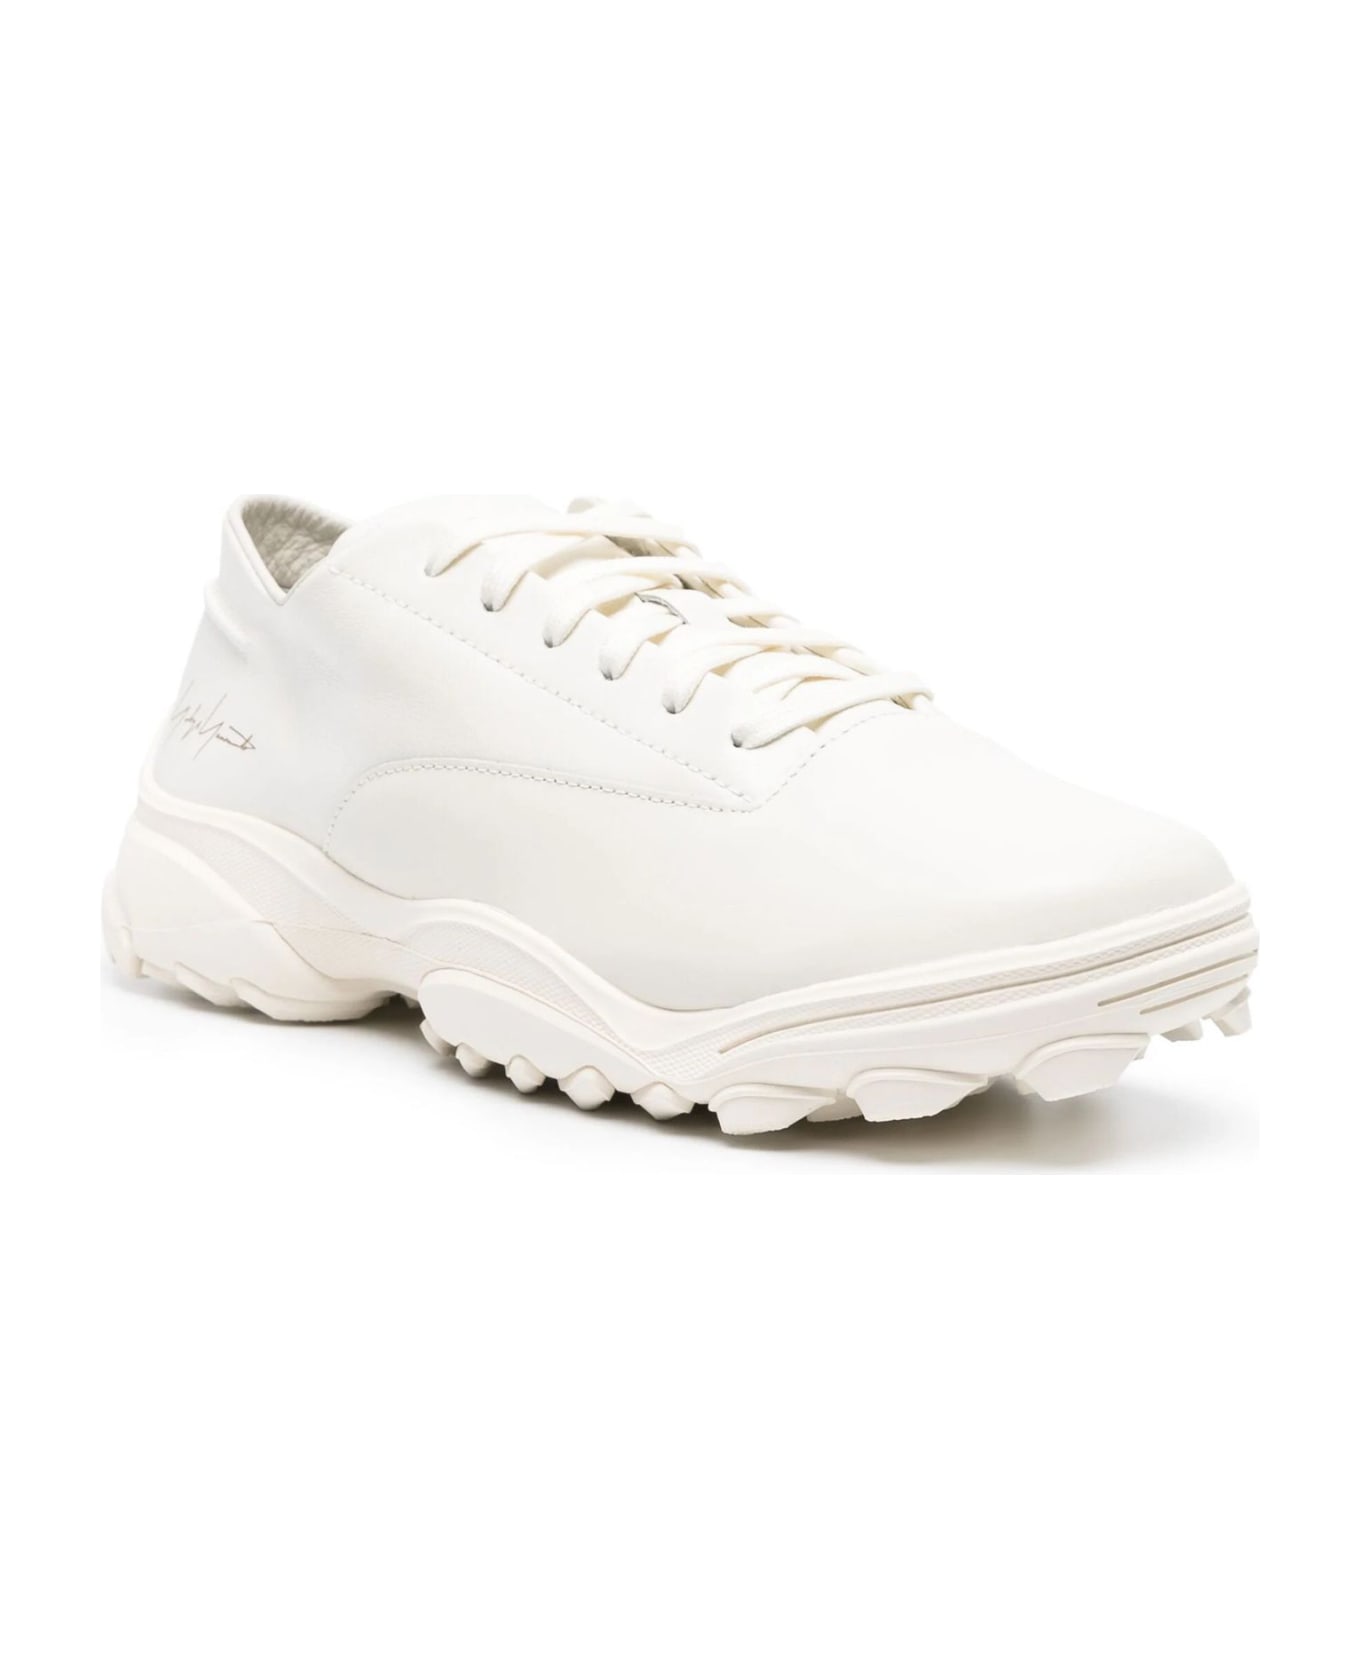 Y-3 Sneakers White - White スニーカー